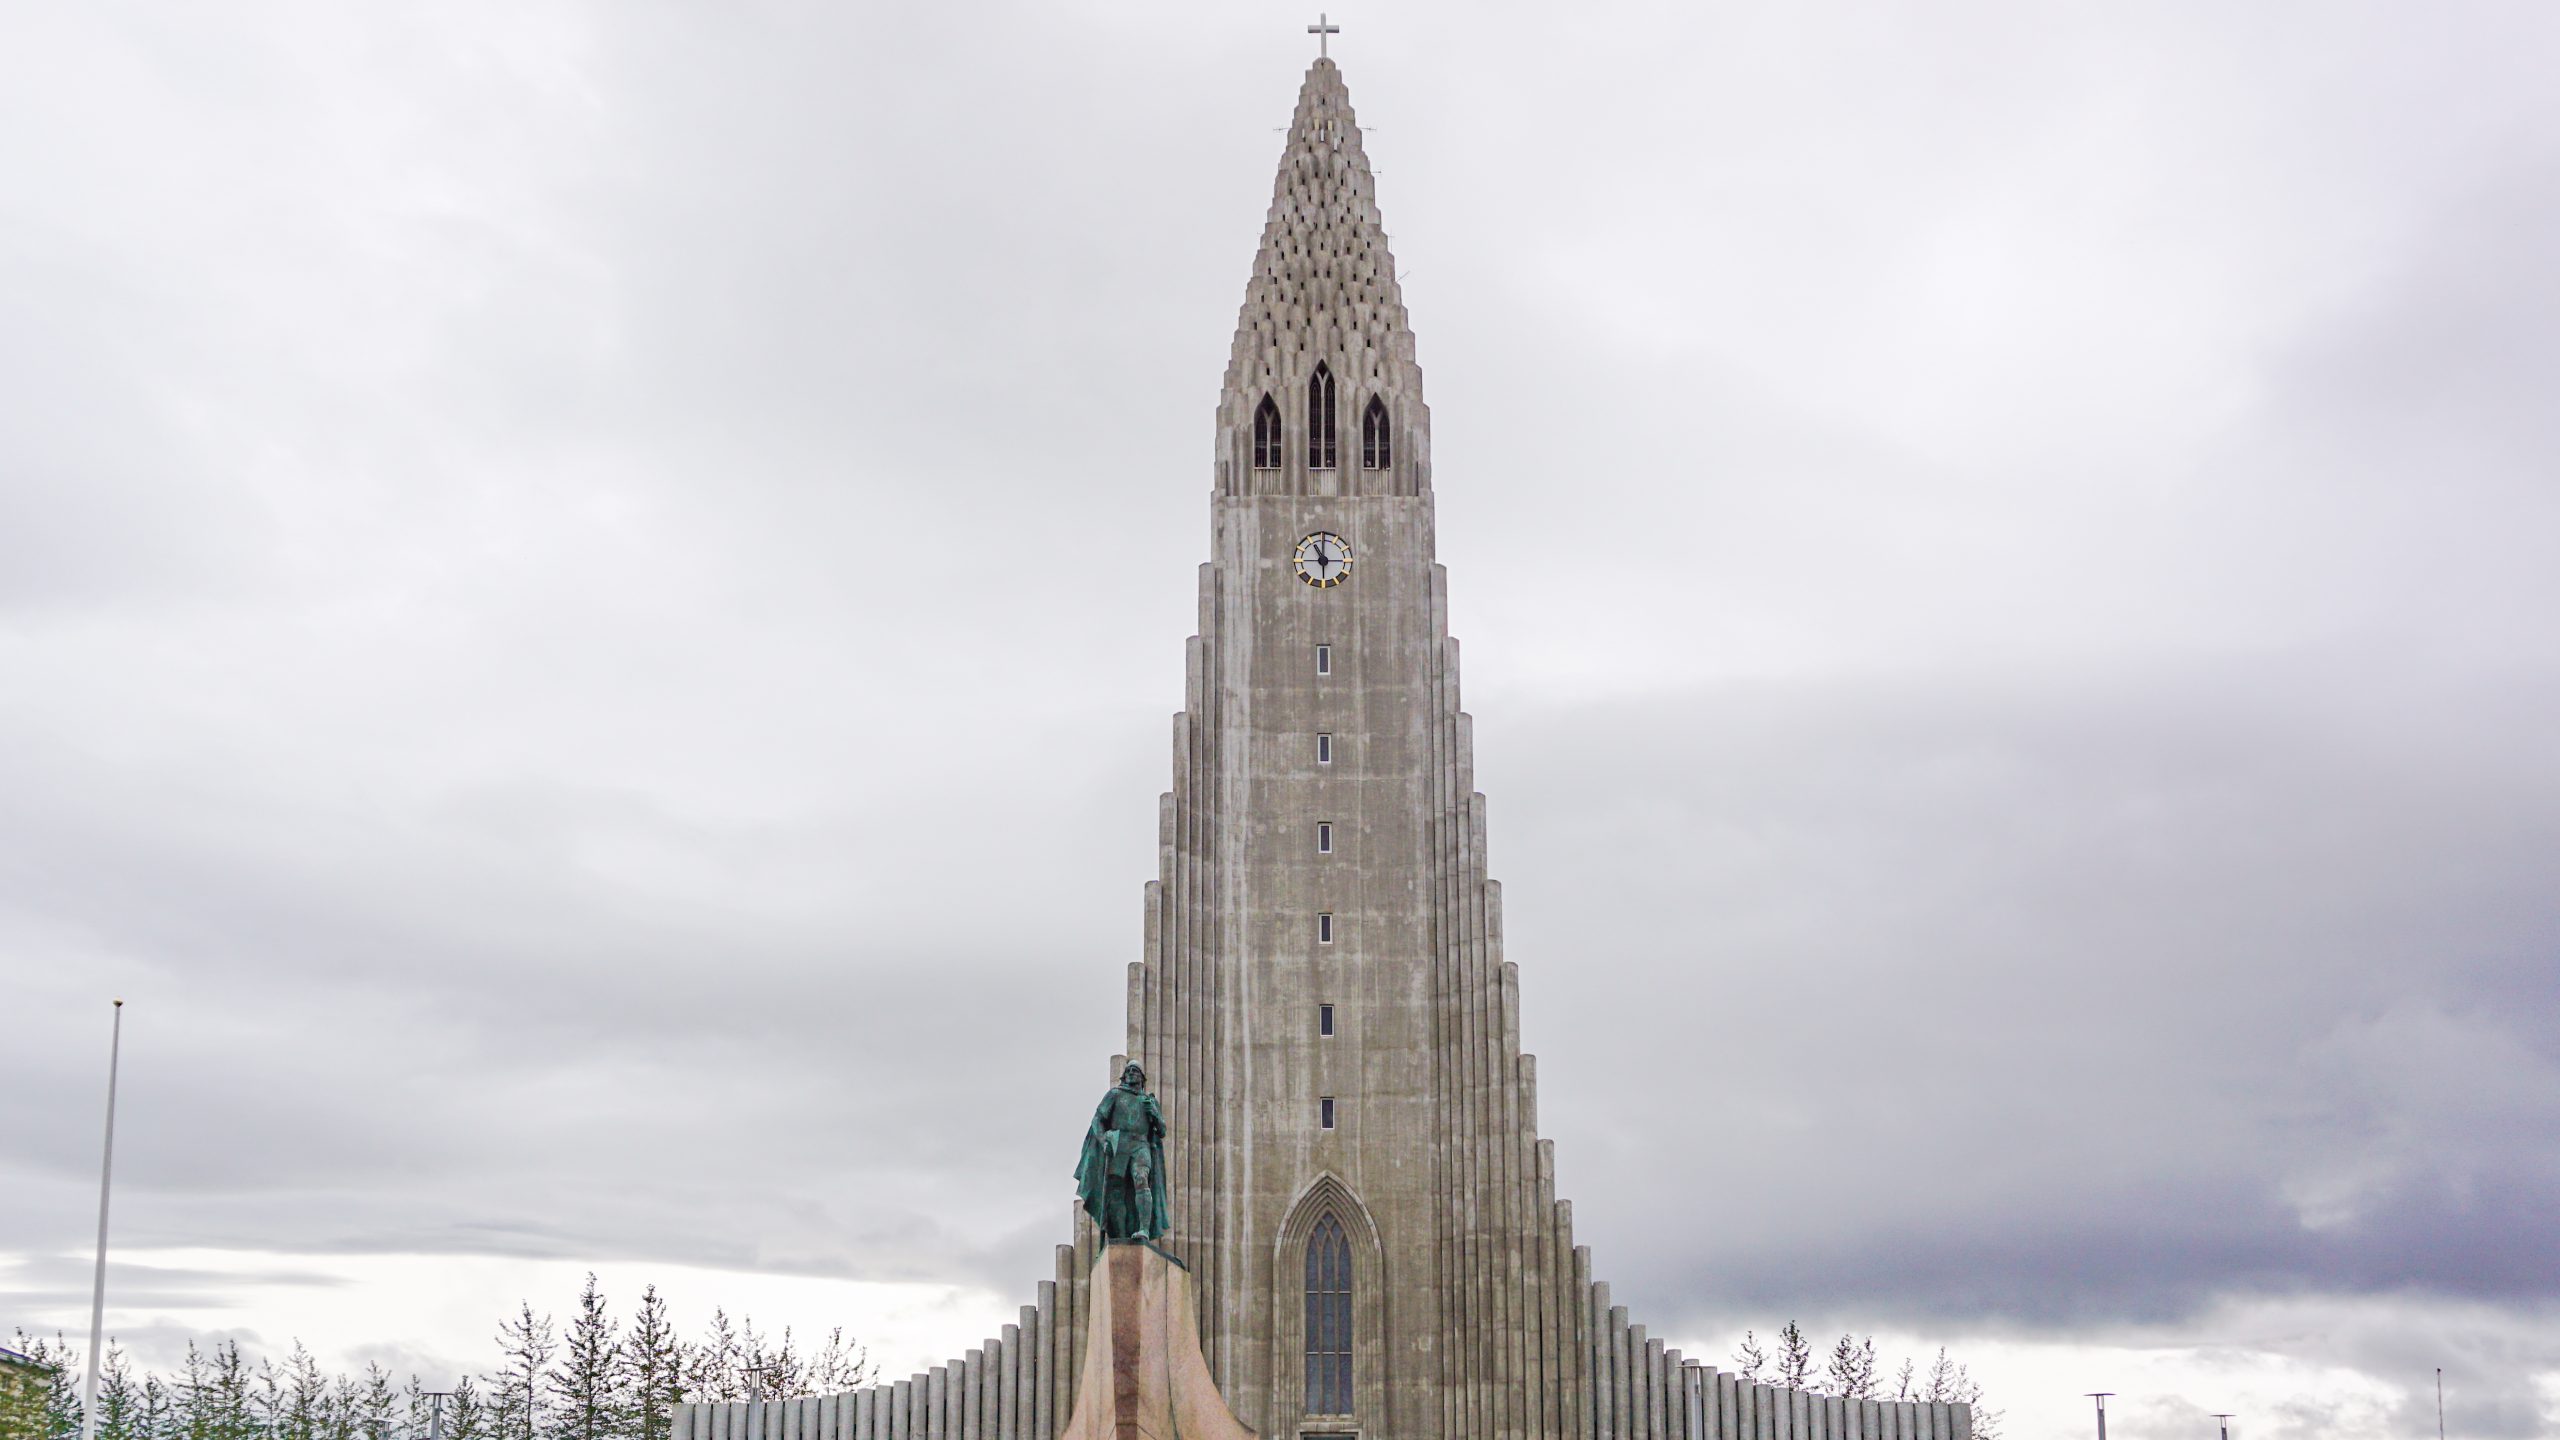 Photo of Hallgrimskirkja for the 3 Days in Reykjavik Itinerary post